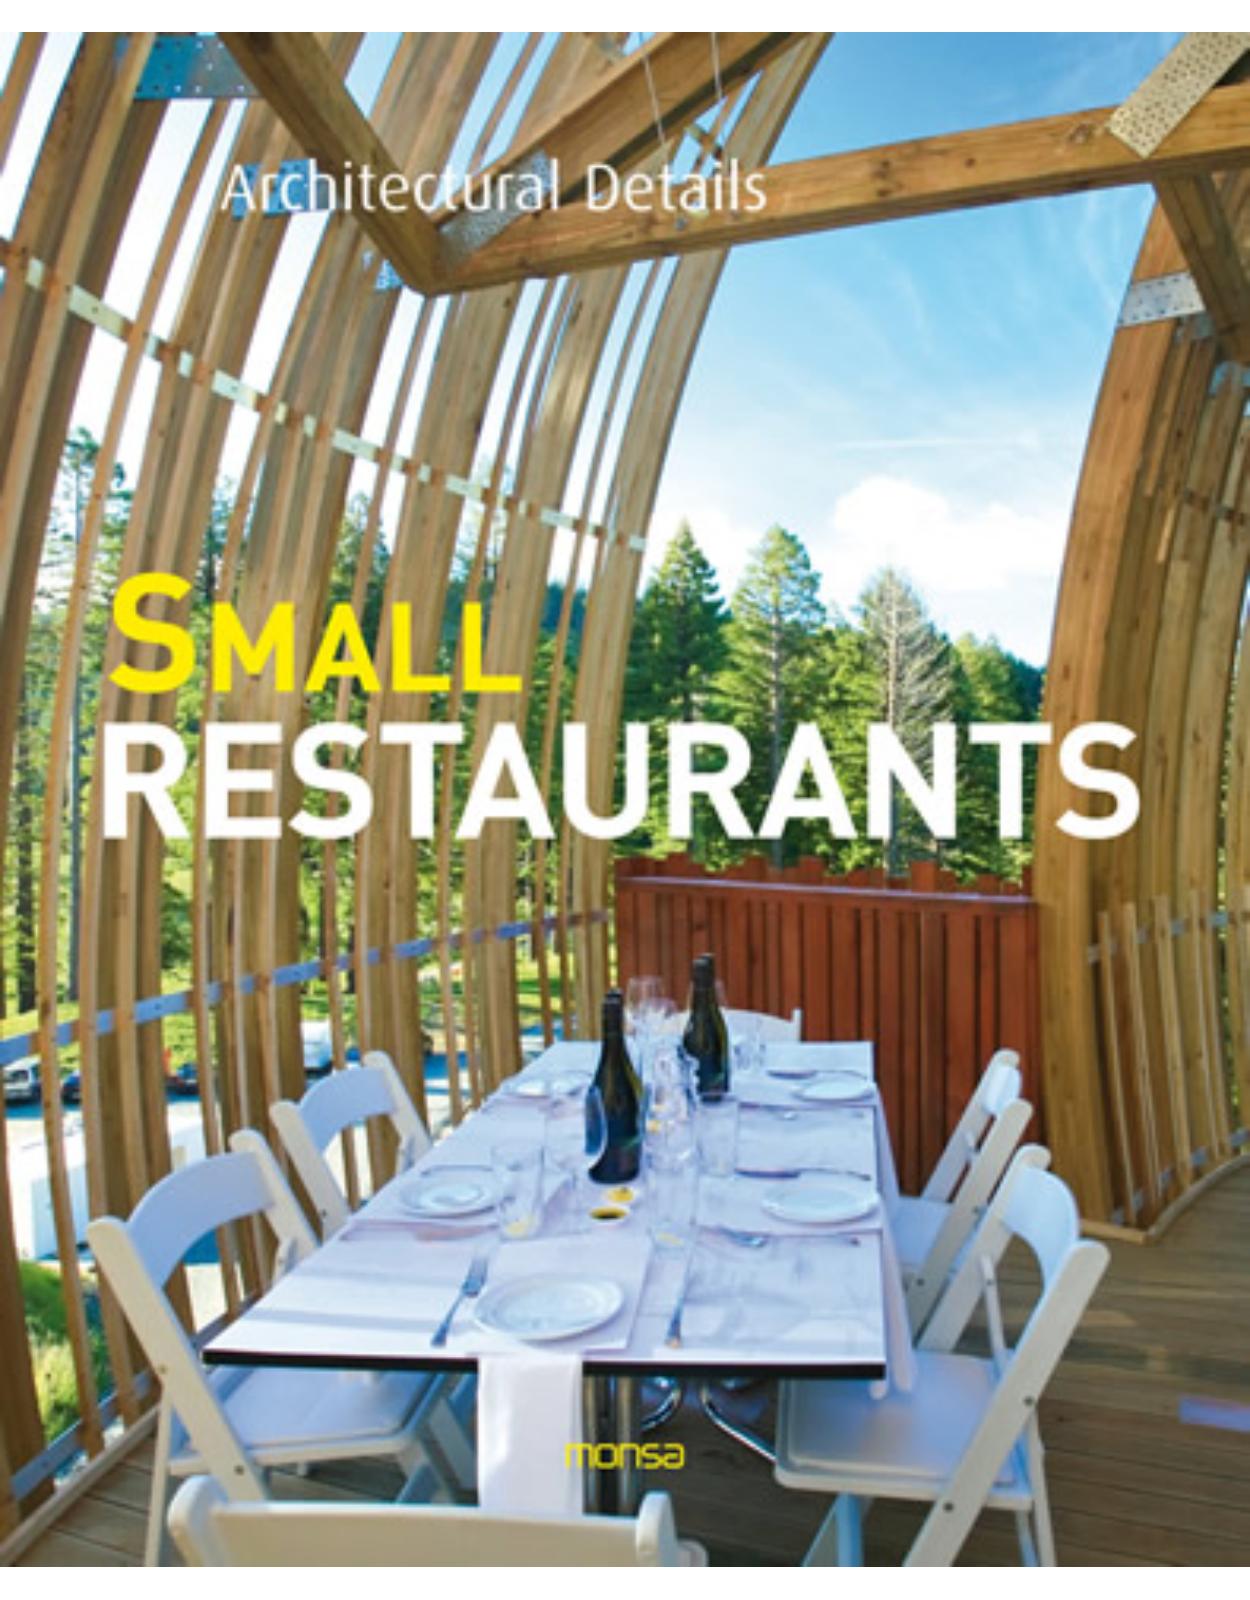 Small Restaurants (Architectural Details)